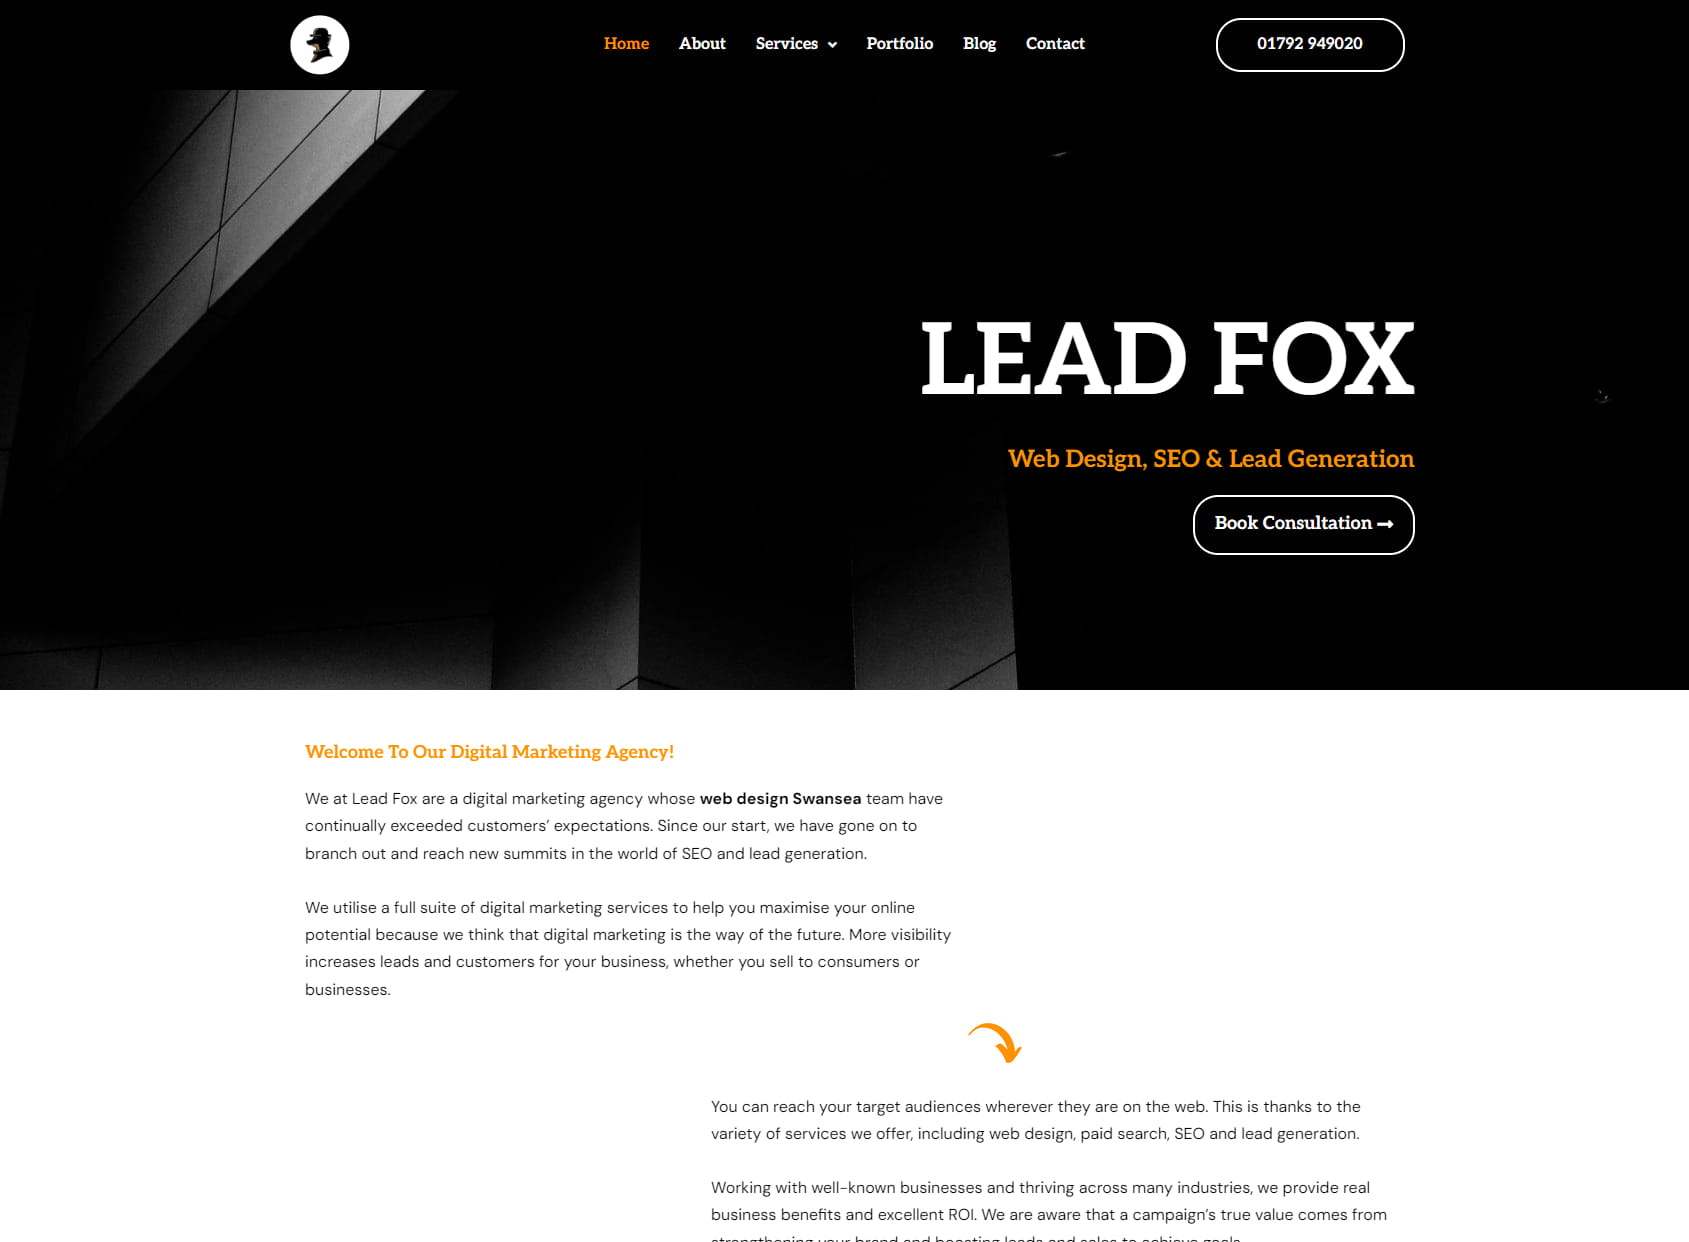 Lead Fox